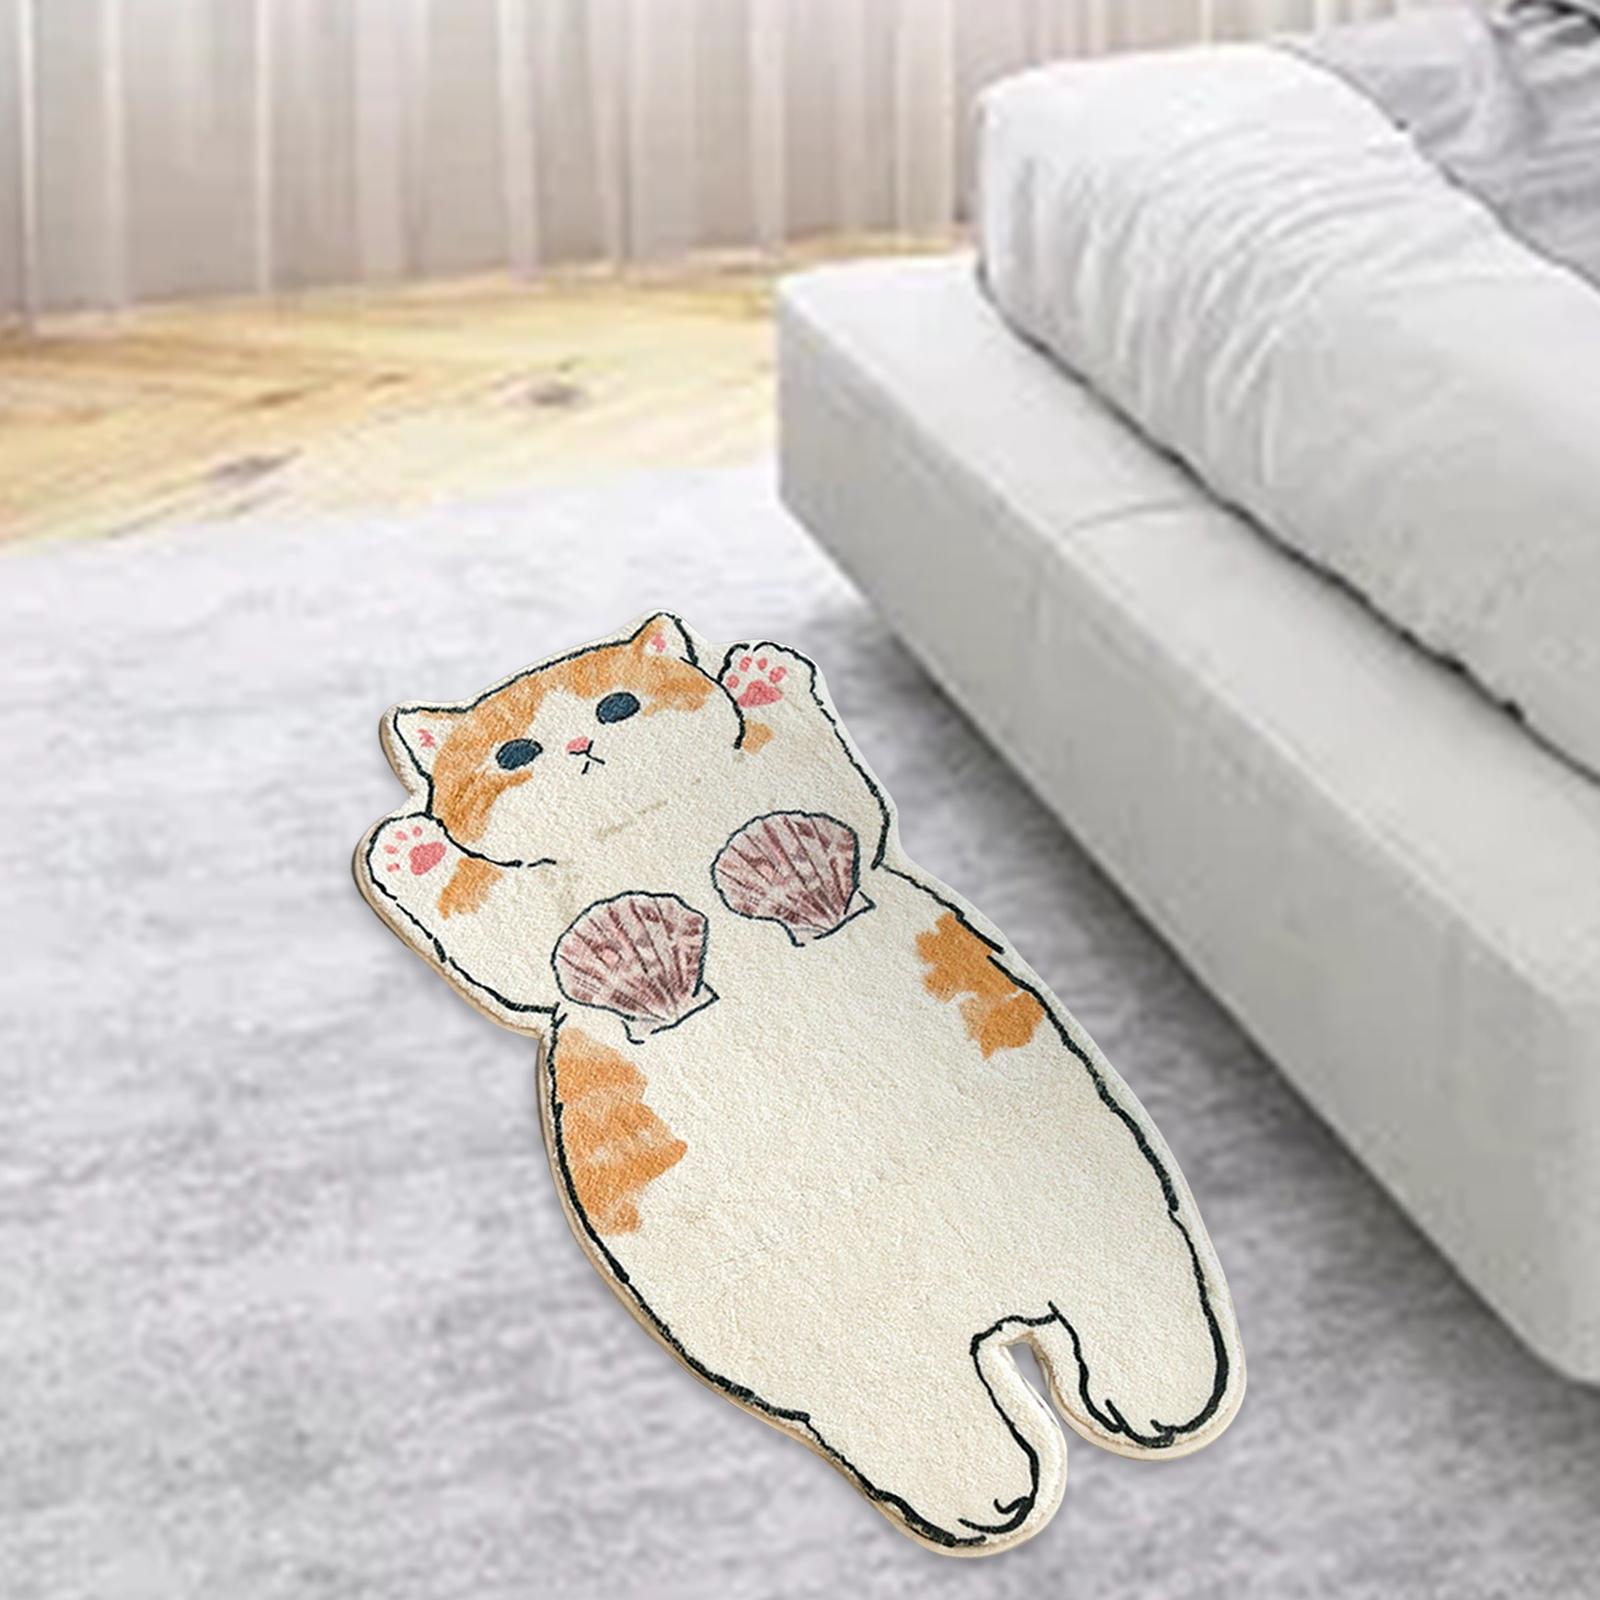 Floor Mats Area Rug Cartoon Cat Carpet for Bedroom Bathroom Home Decoration D